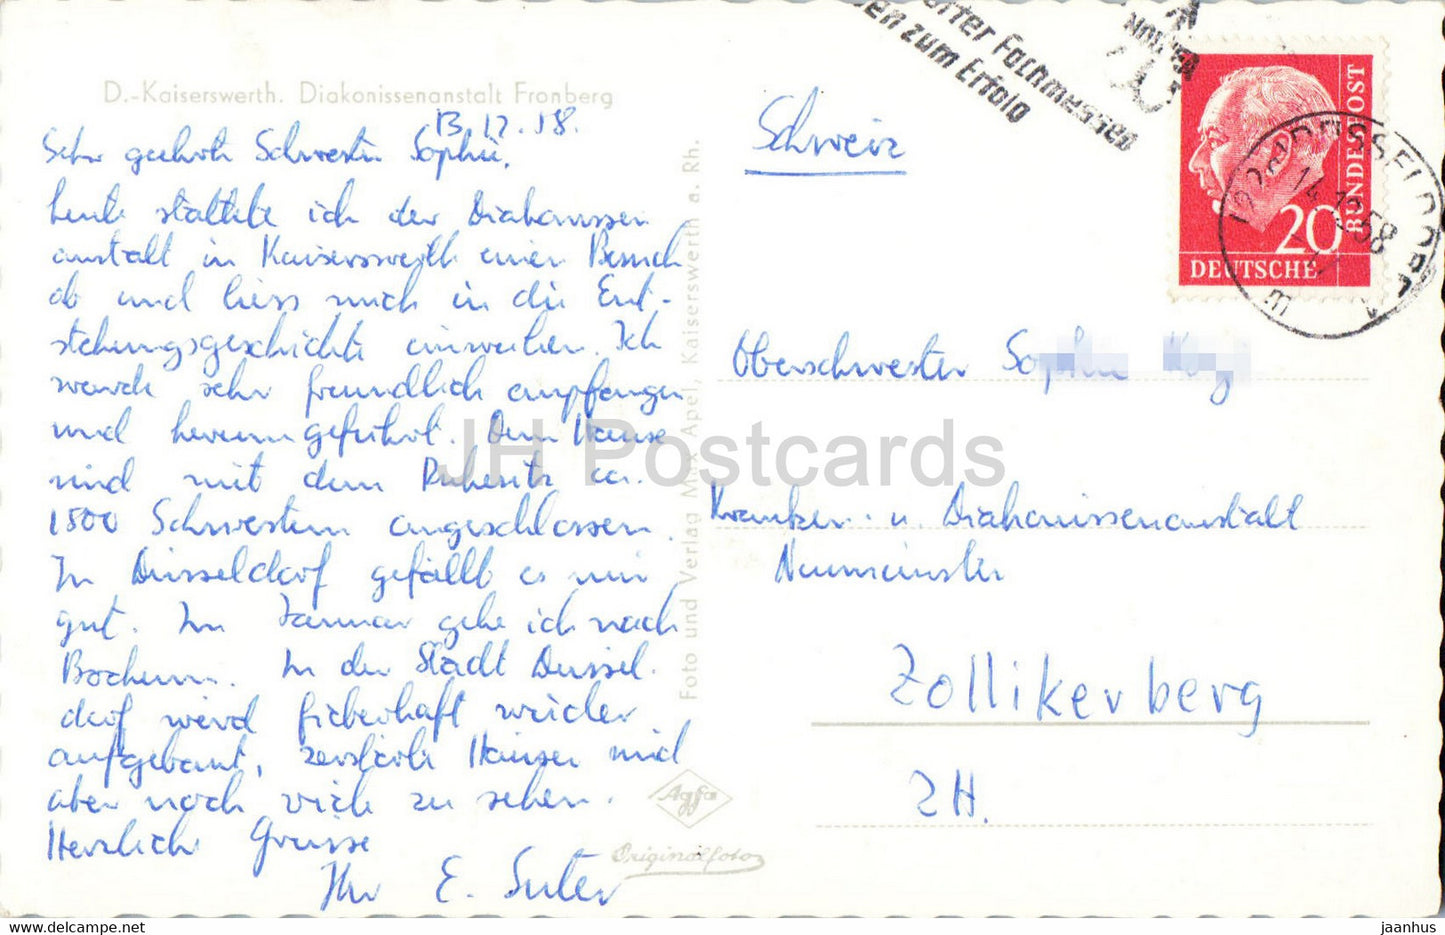 D Kaiserswerth - Diakonissenanstalt Fronberg - old postcard - 1958 - Germany - used